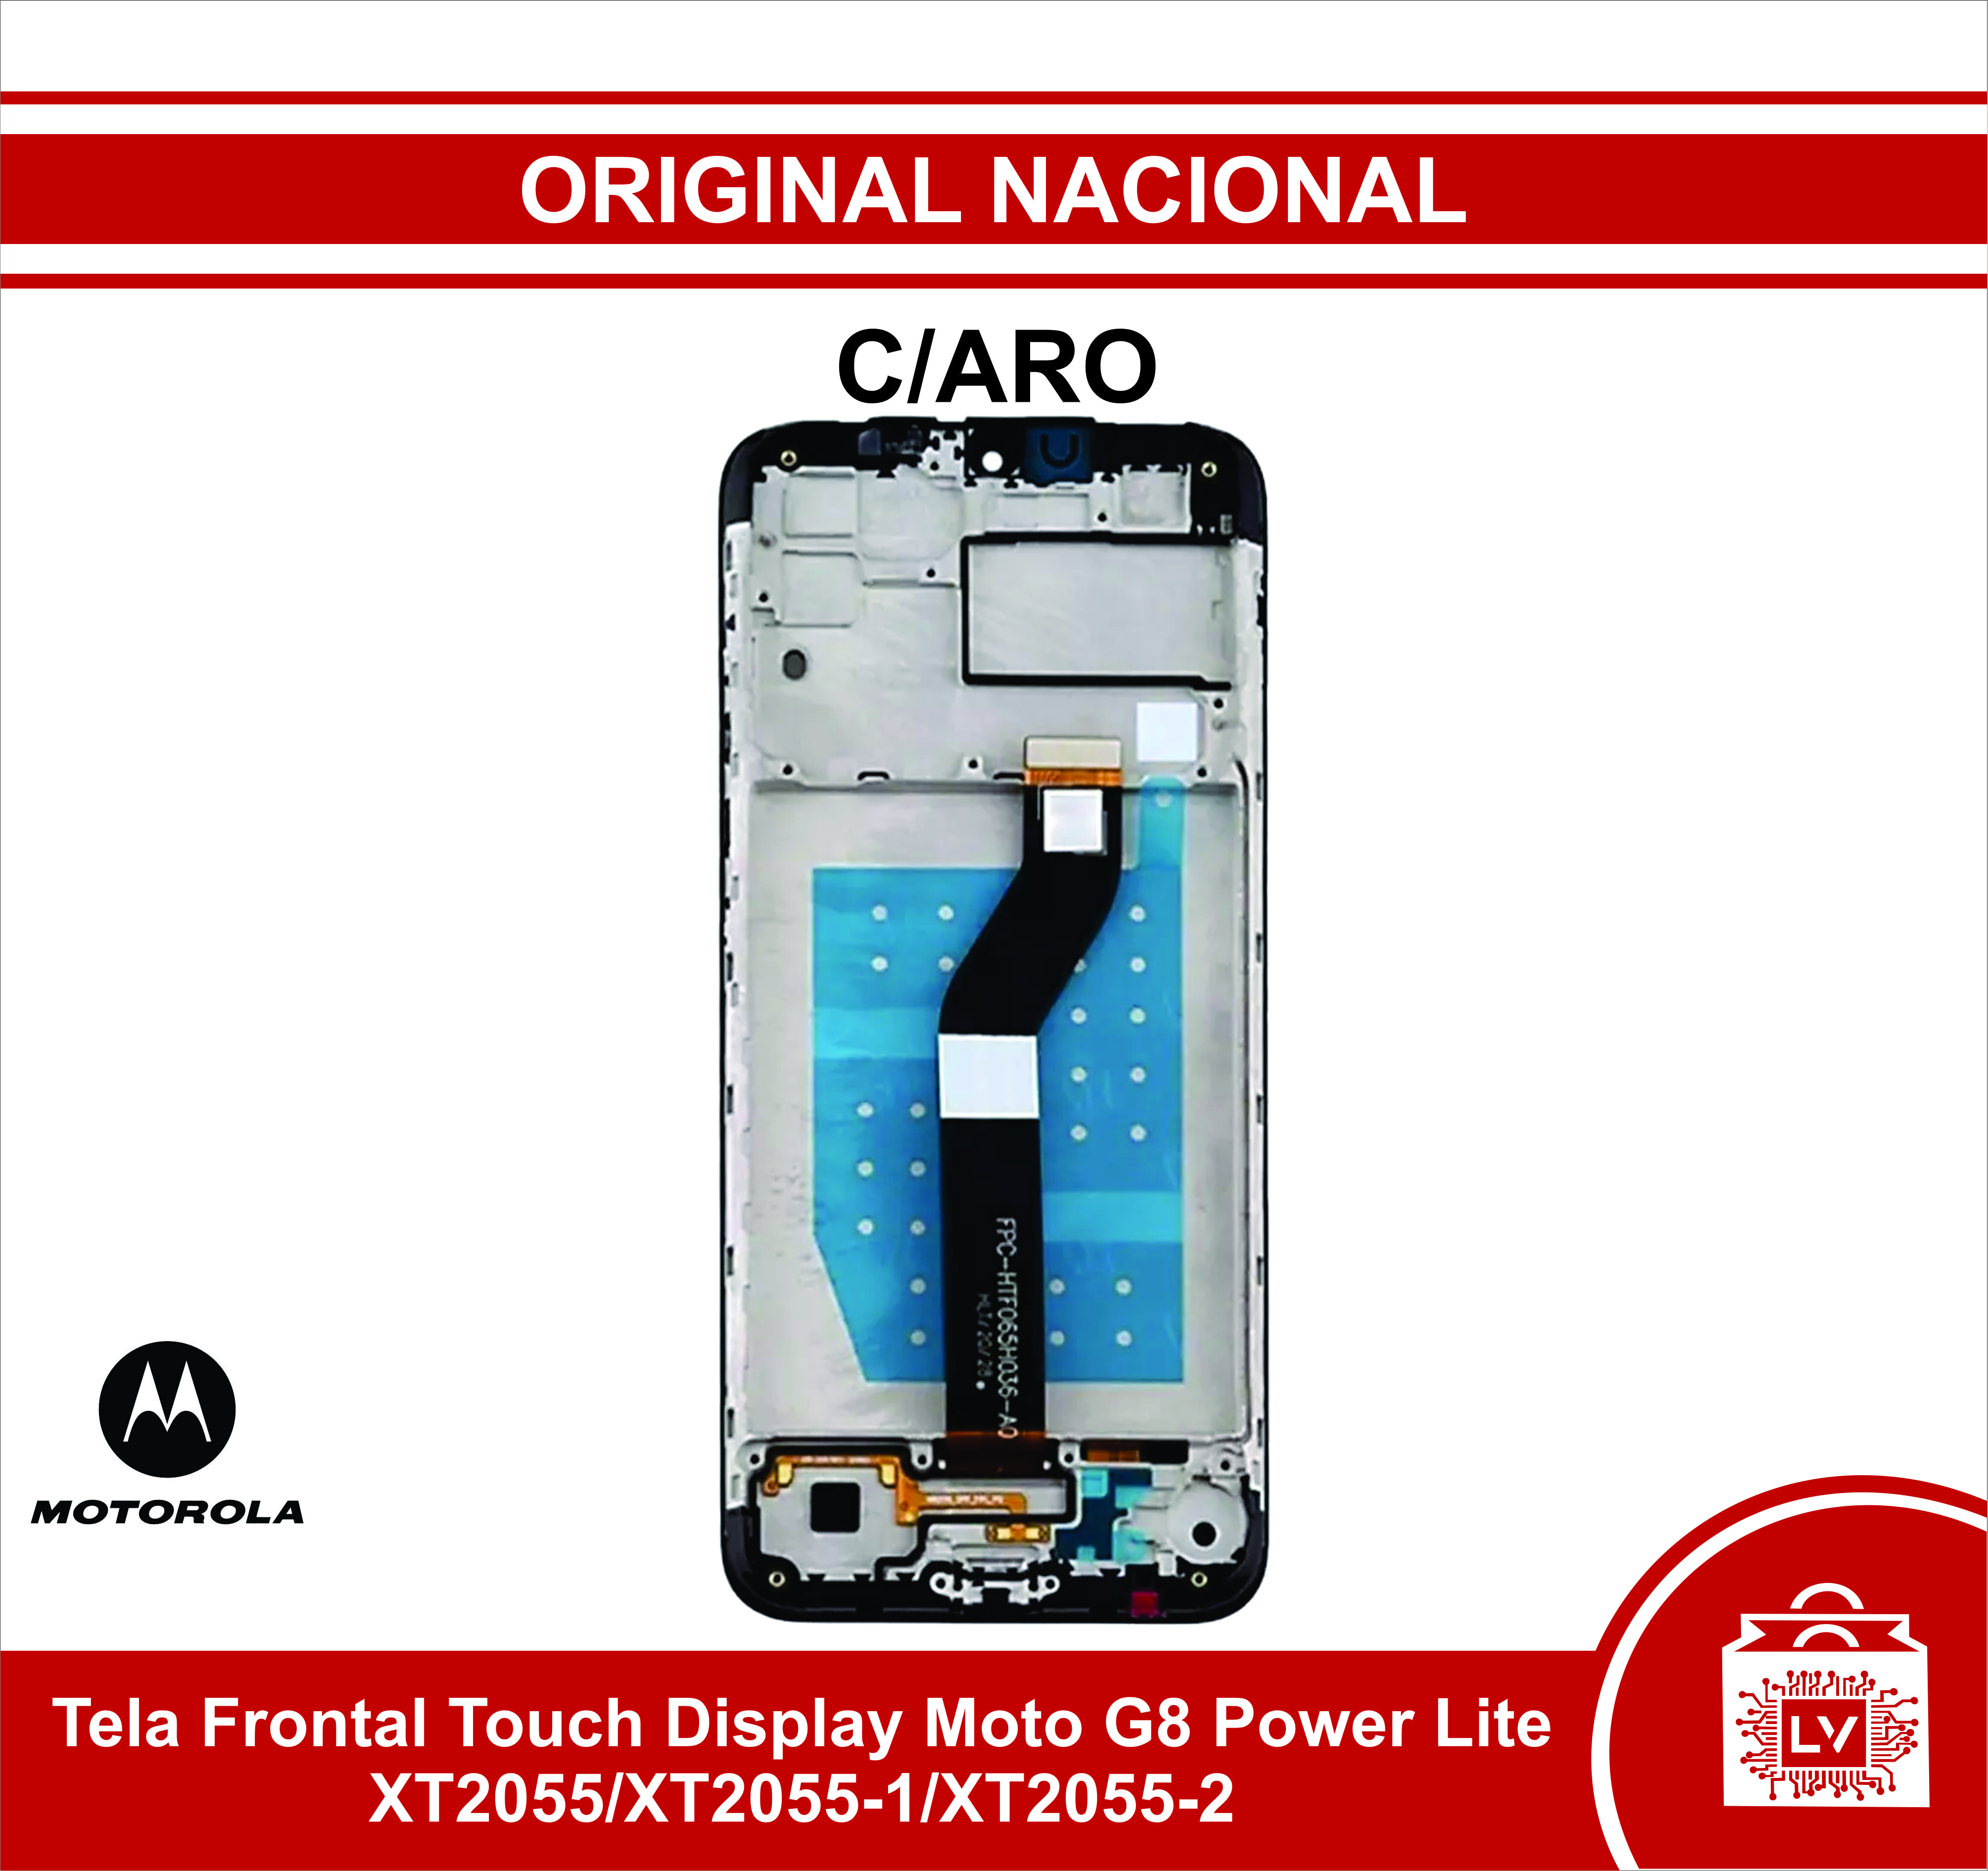 Tela Frontal Touch Display Moto G8 Power Lite XT2055/XT2055-1/XT2055-2